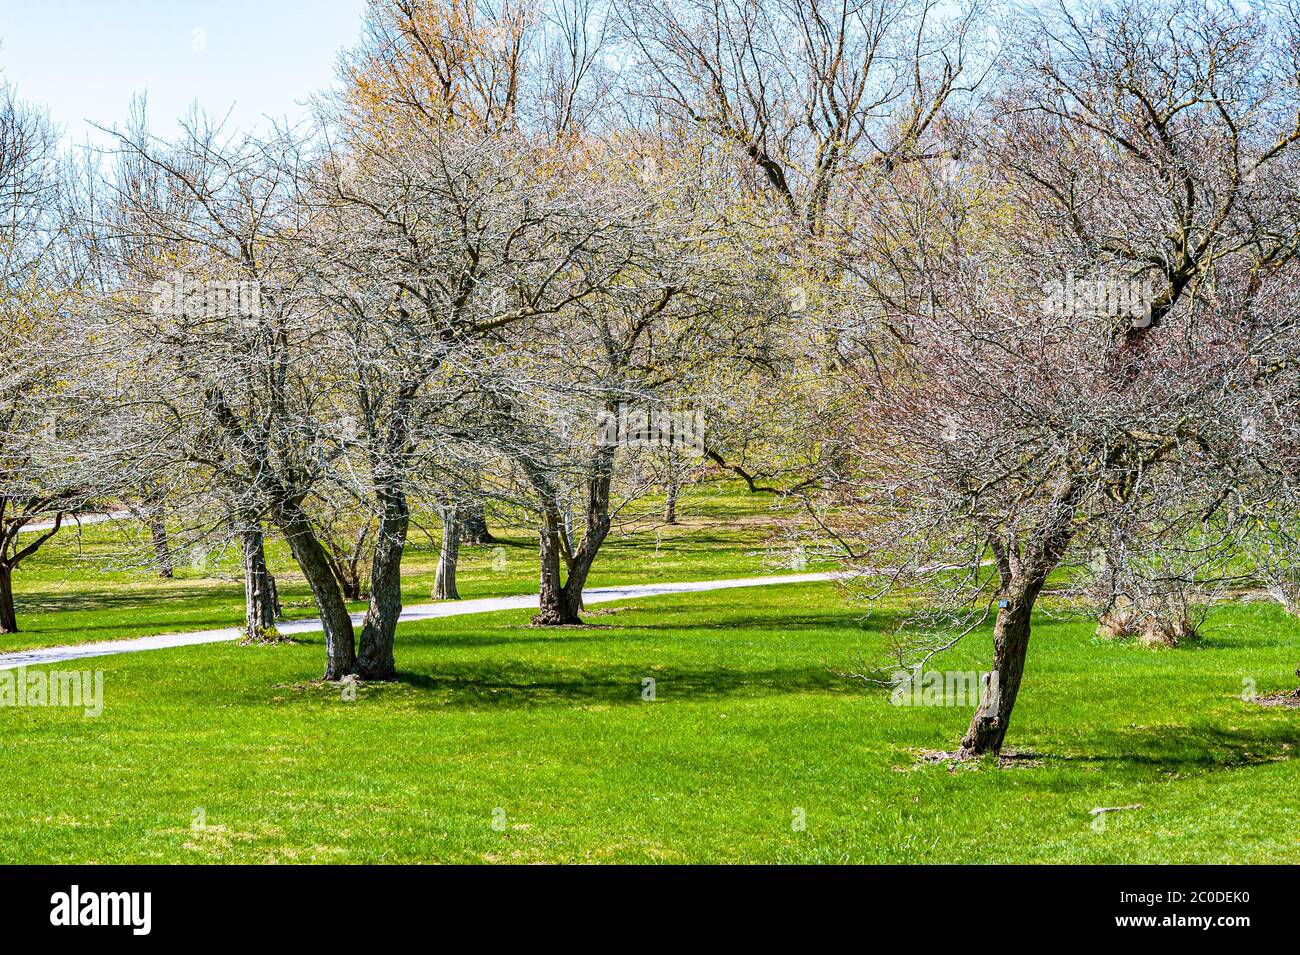 spreading hawthorn trees in urban park Stock Photo